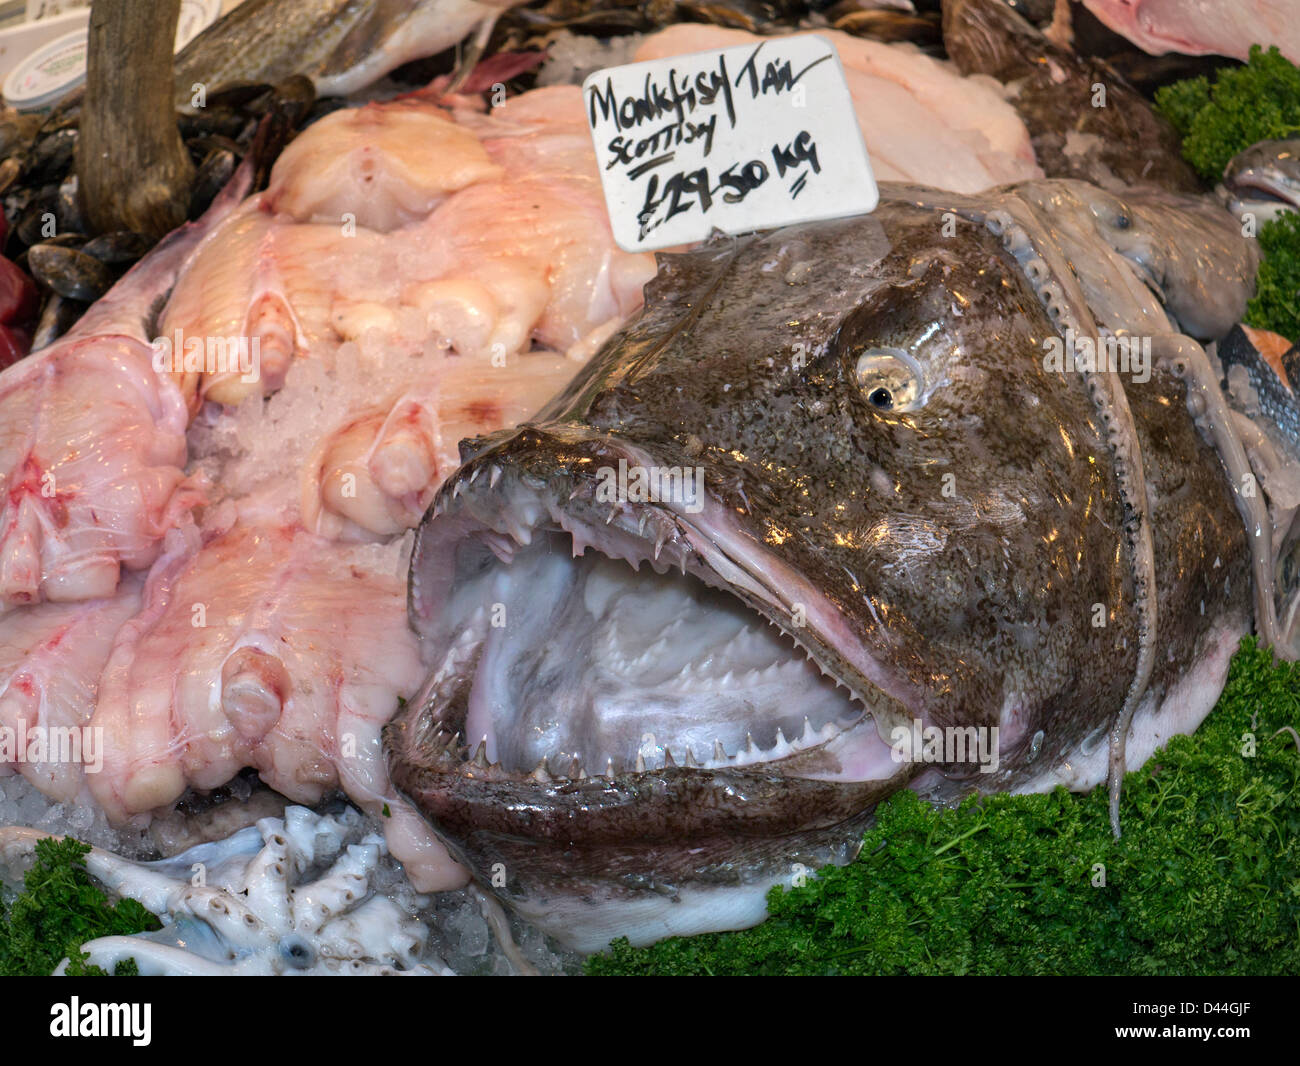 Monkfish teeth mouth Scottish on display at fishmongers stall Borough Market Southwark London UK Stock Photo